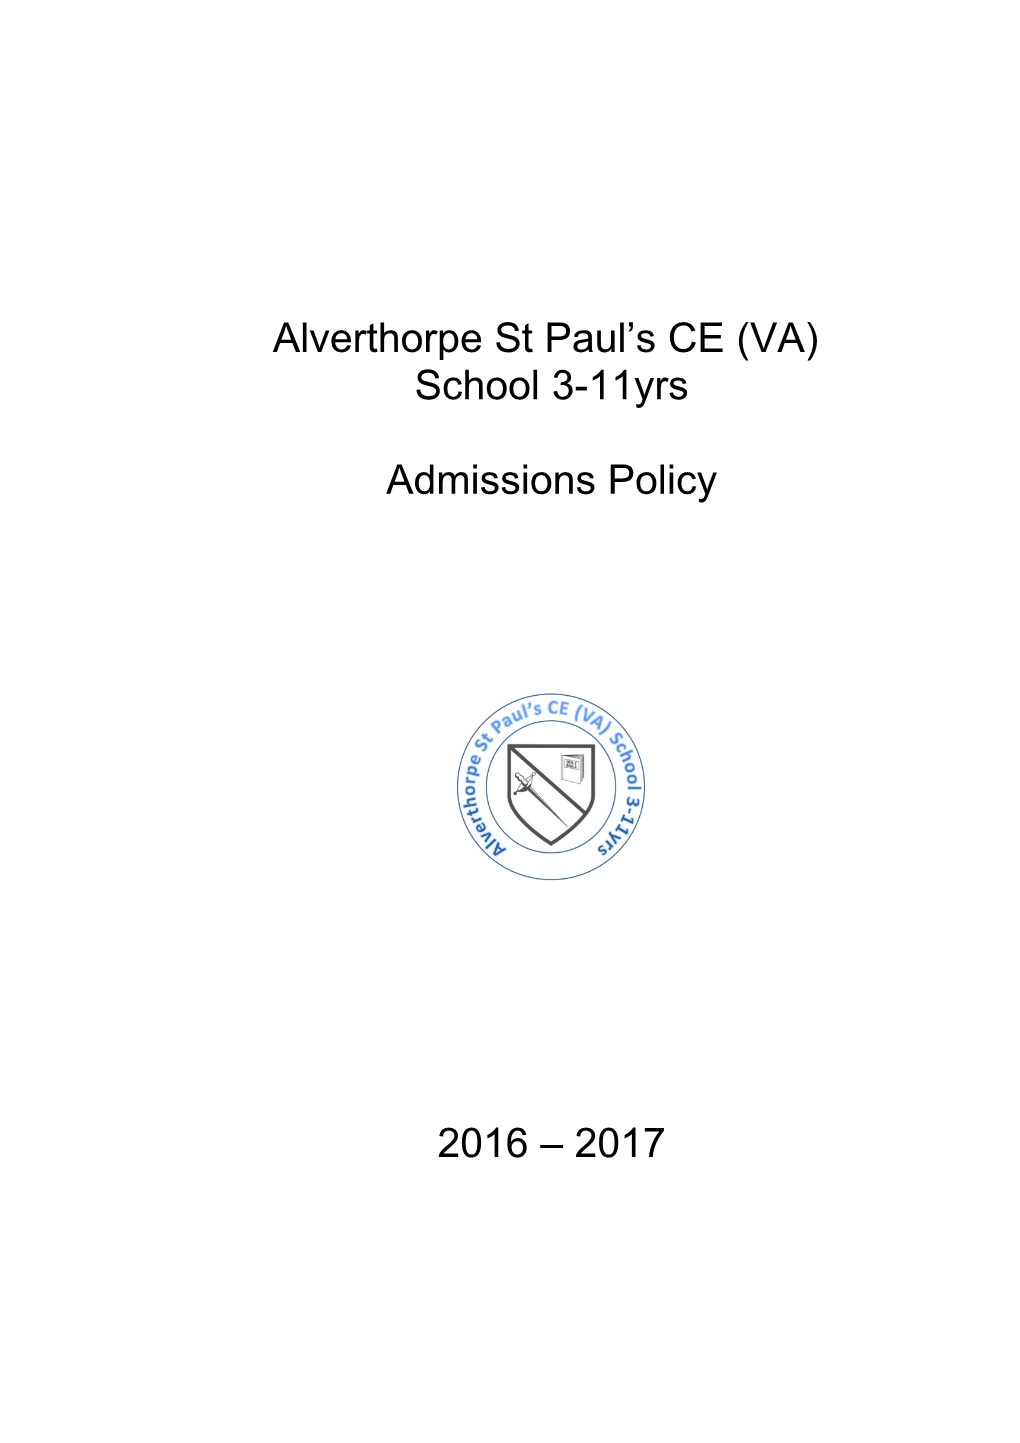 Alverthorpe St Pauls CE (VA) 3-11